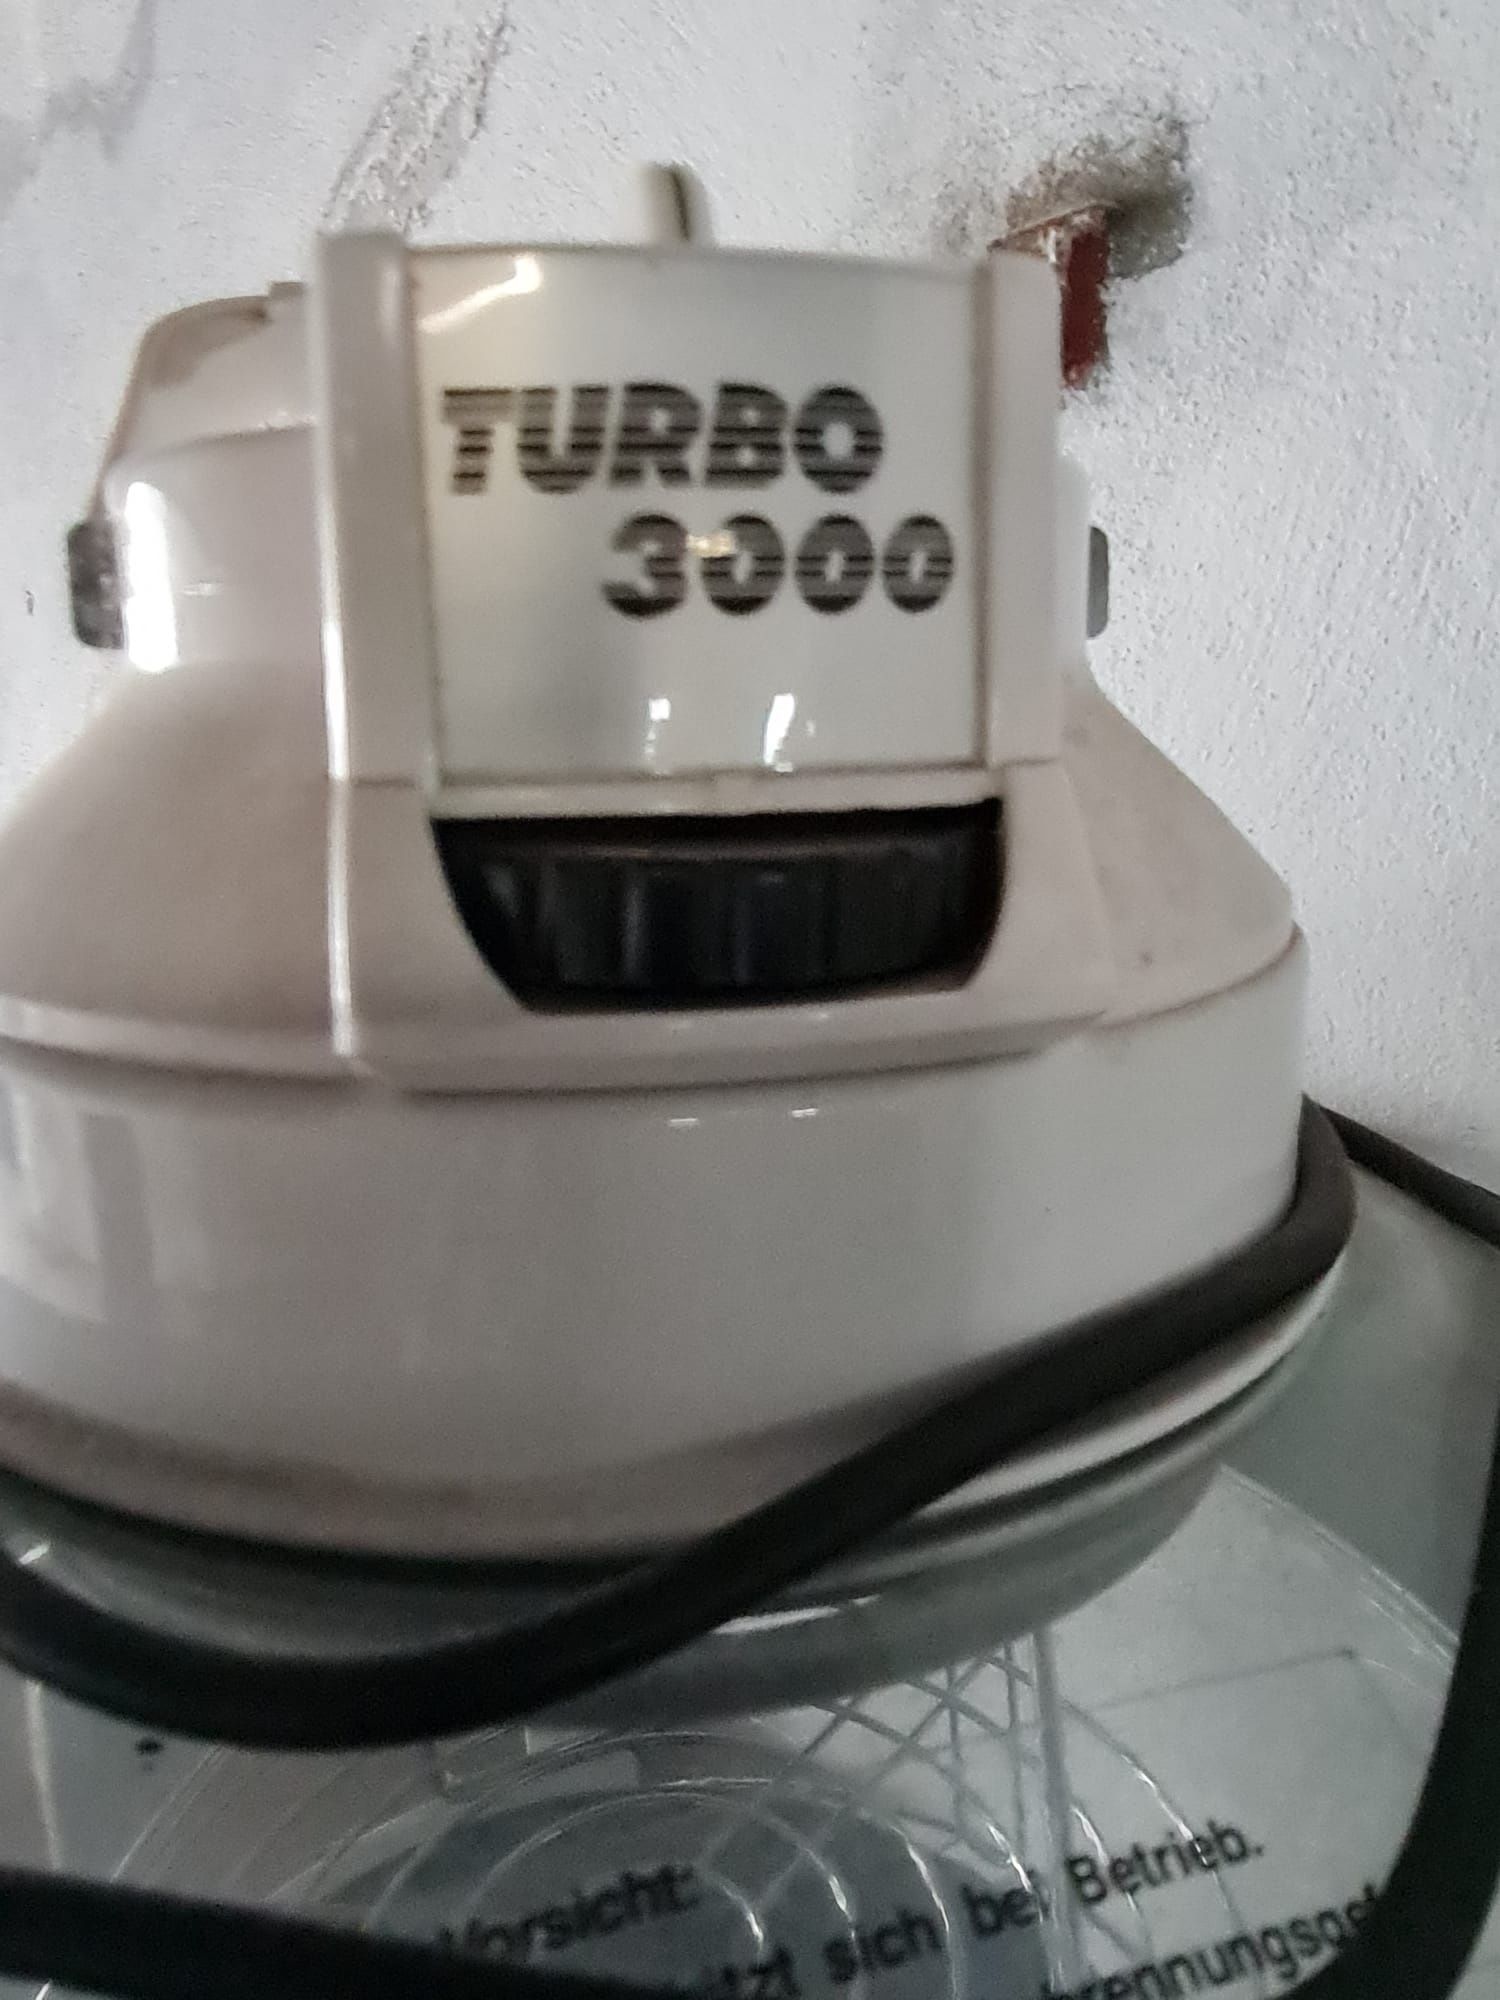 Forno de ar quente turbo 3000